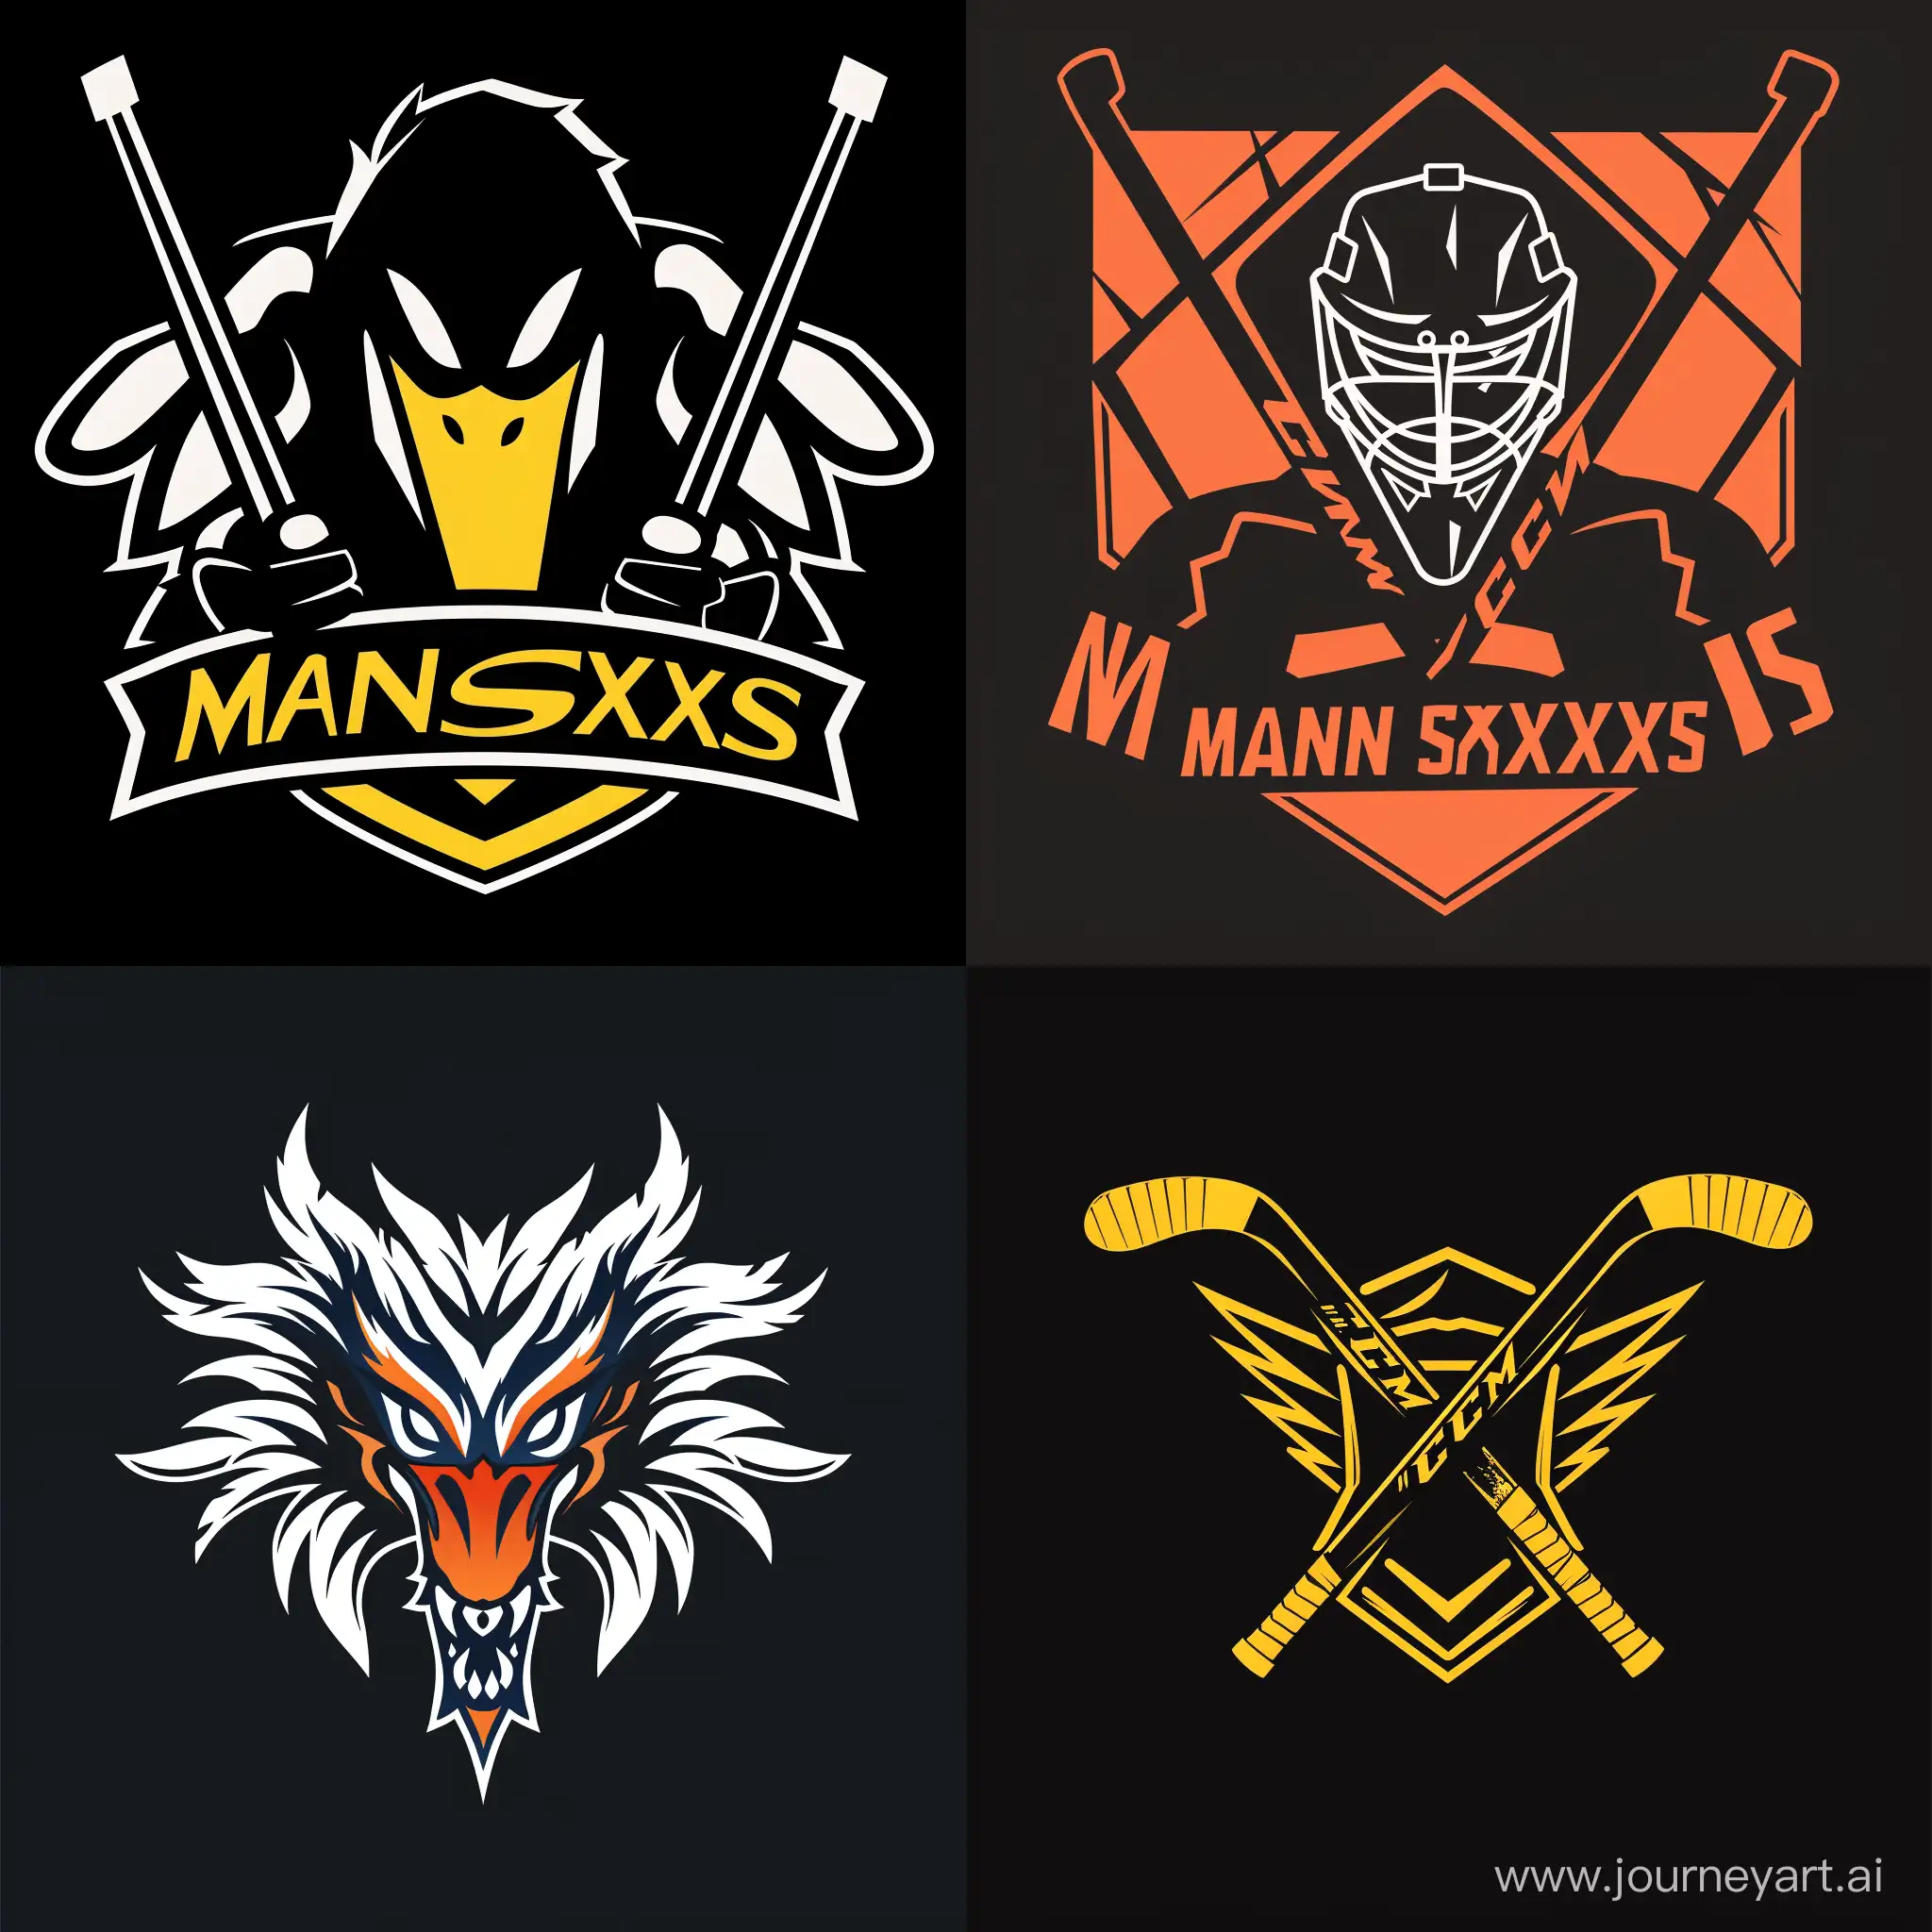 Main-Systems-Hockey-Team-Logo-with-Version-6-Aspect-Ratio-11